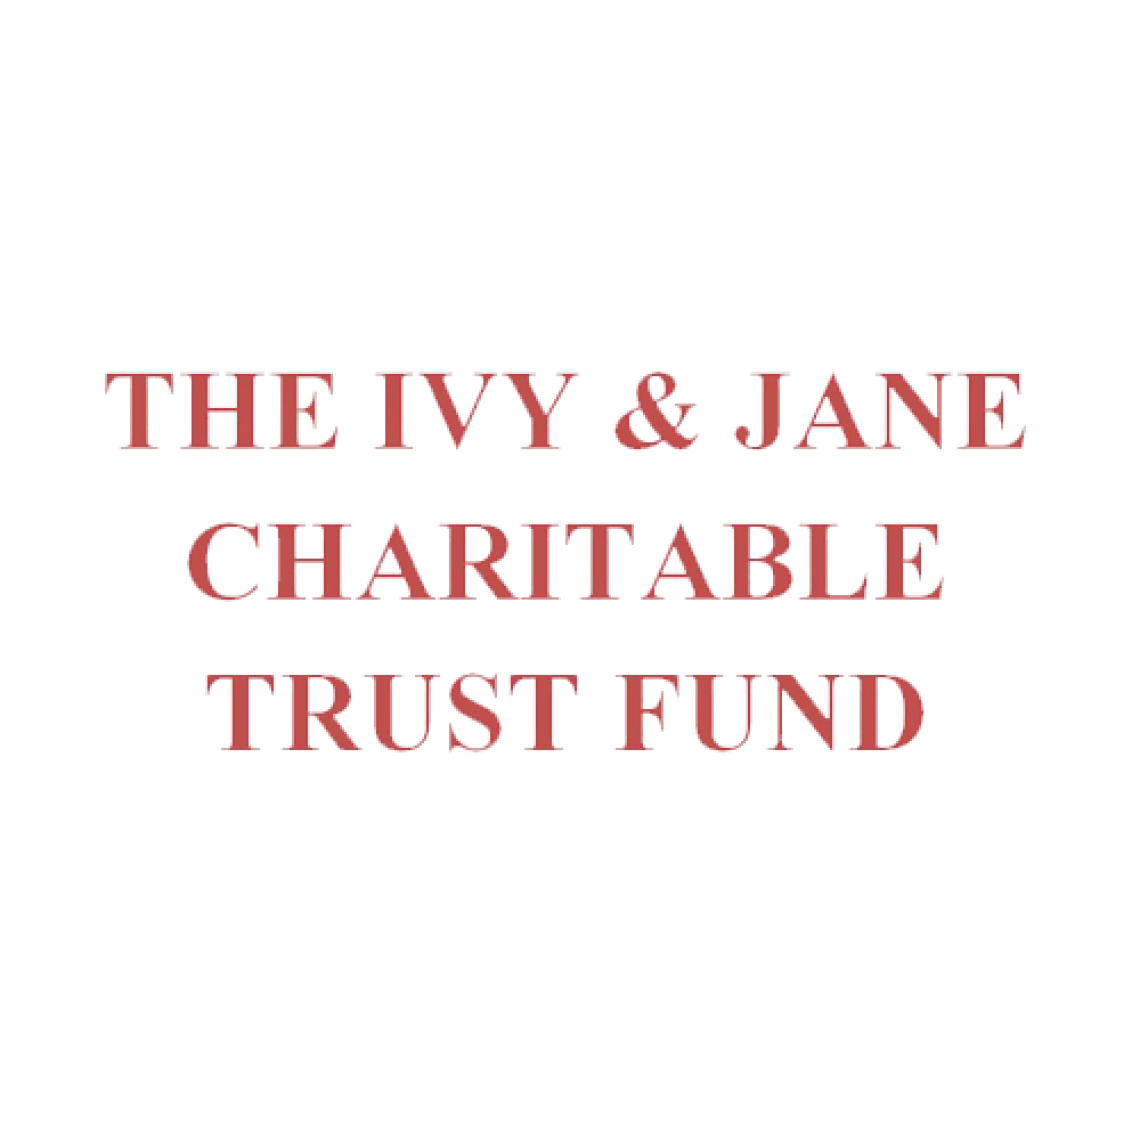 The Ivy & Jane Charitable Trust Fund logo